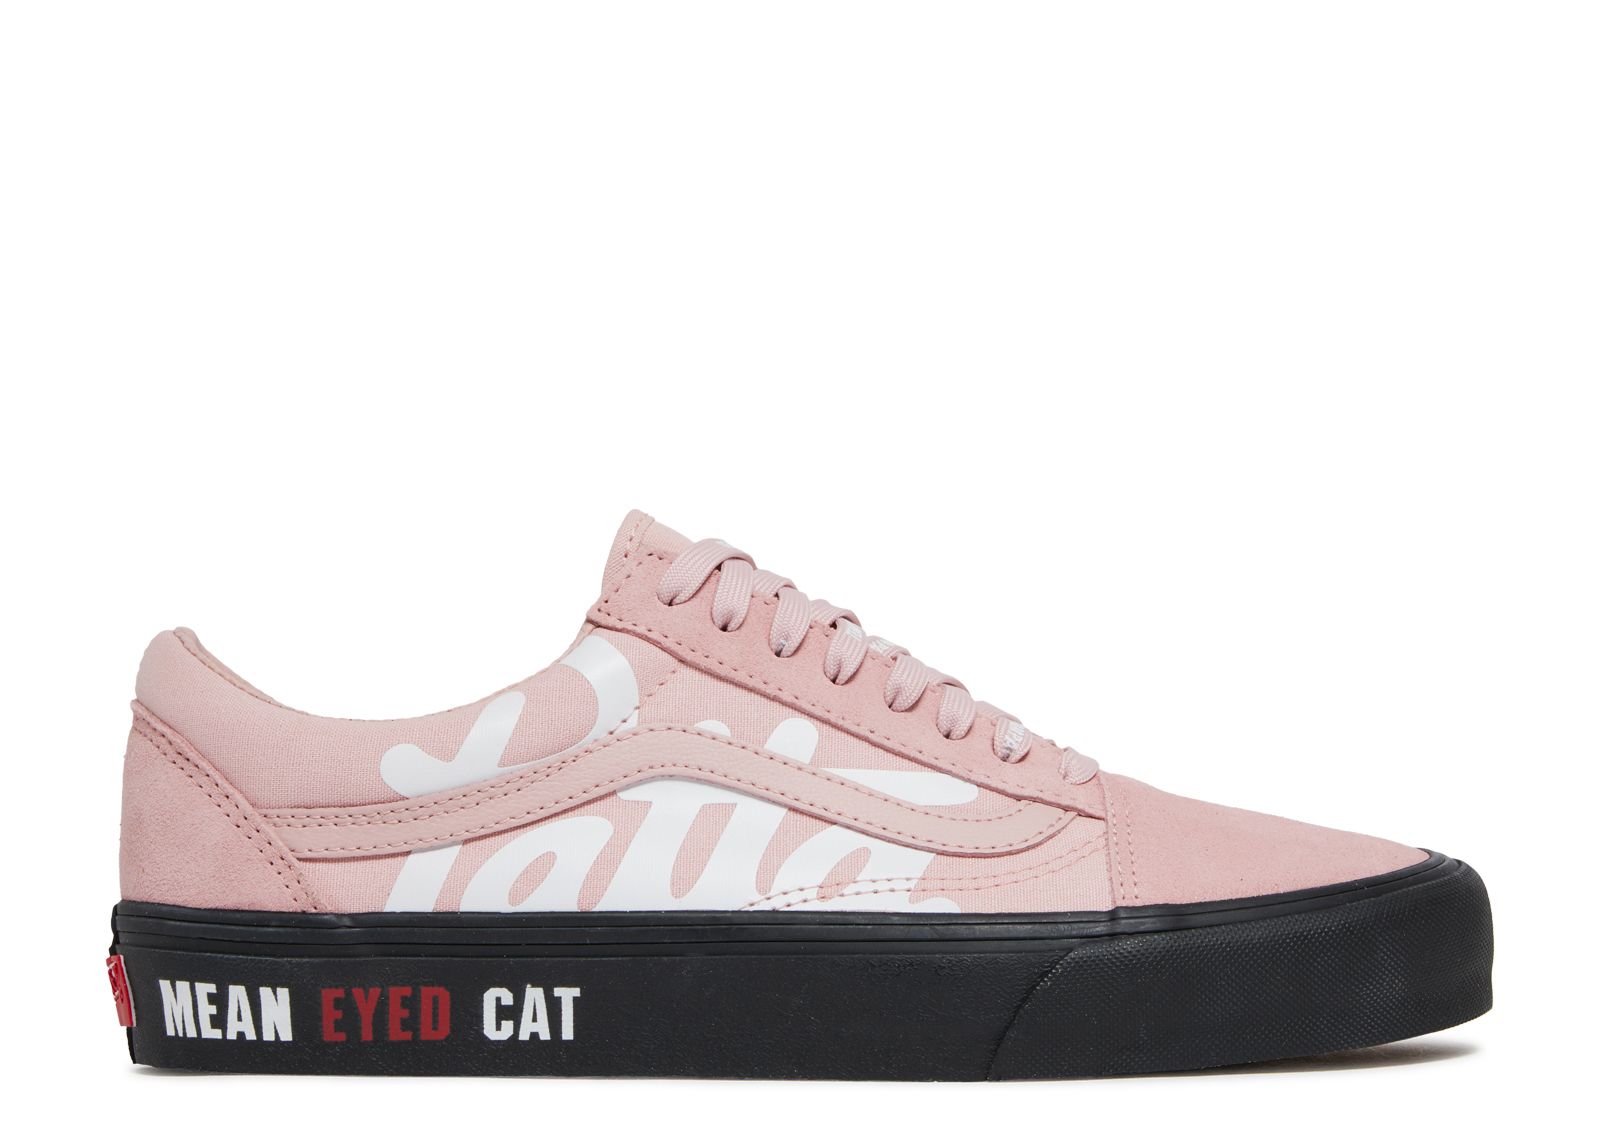 Кроссовки Vans Patta X Old Skool Vlt Lx 'Mean Eyed Cat - Silver Pink', розовый наушники activ cat x 72m pink